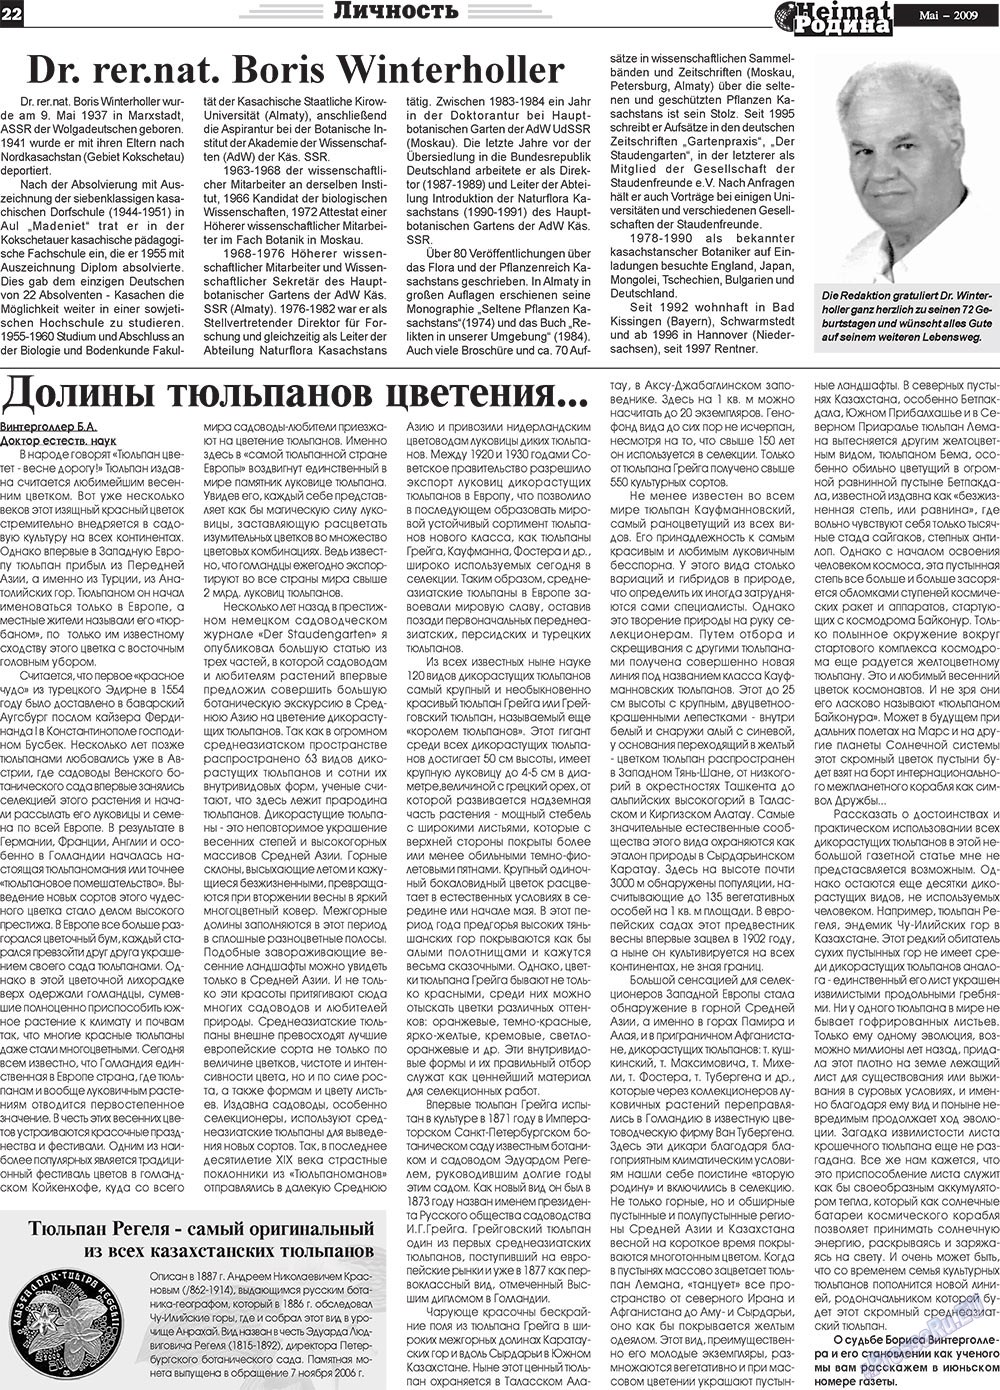 Heimat-Родина, газета. 2009 №5 стр.22